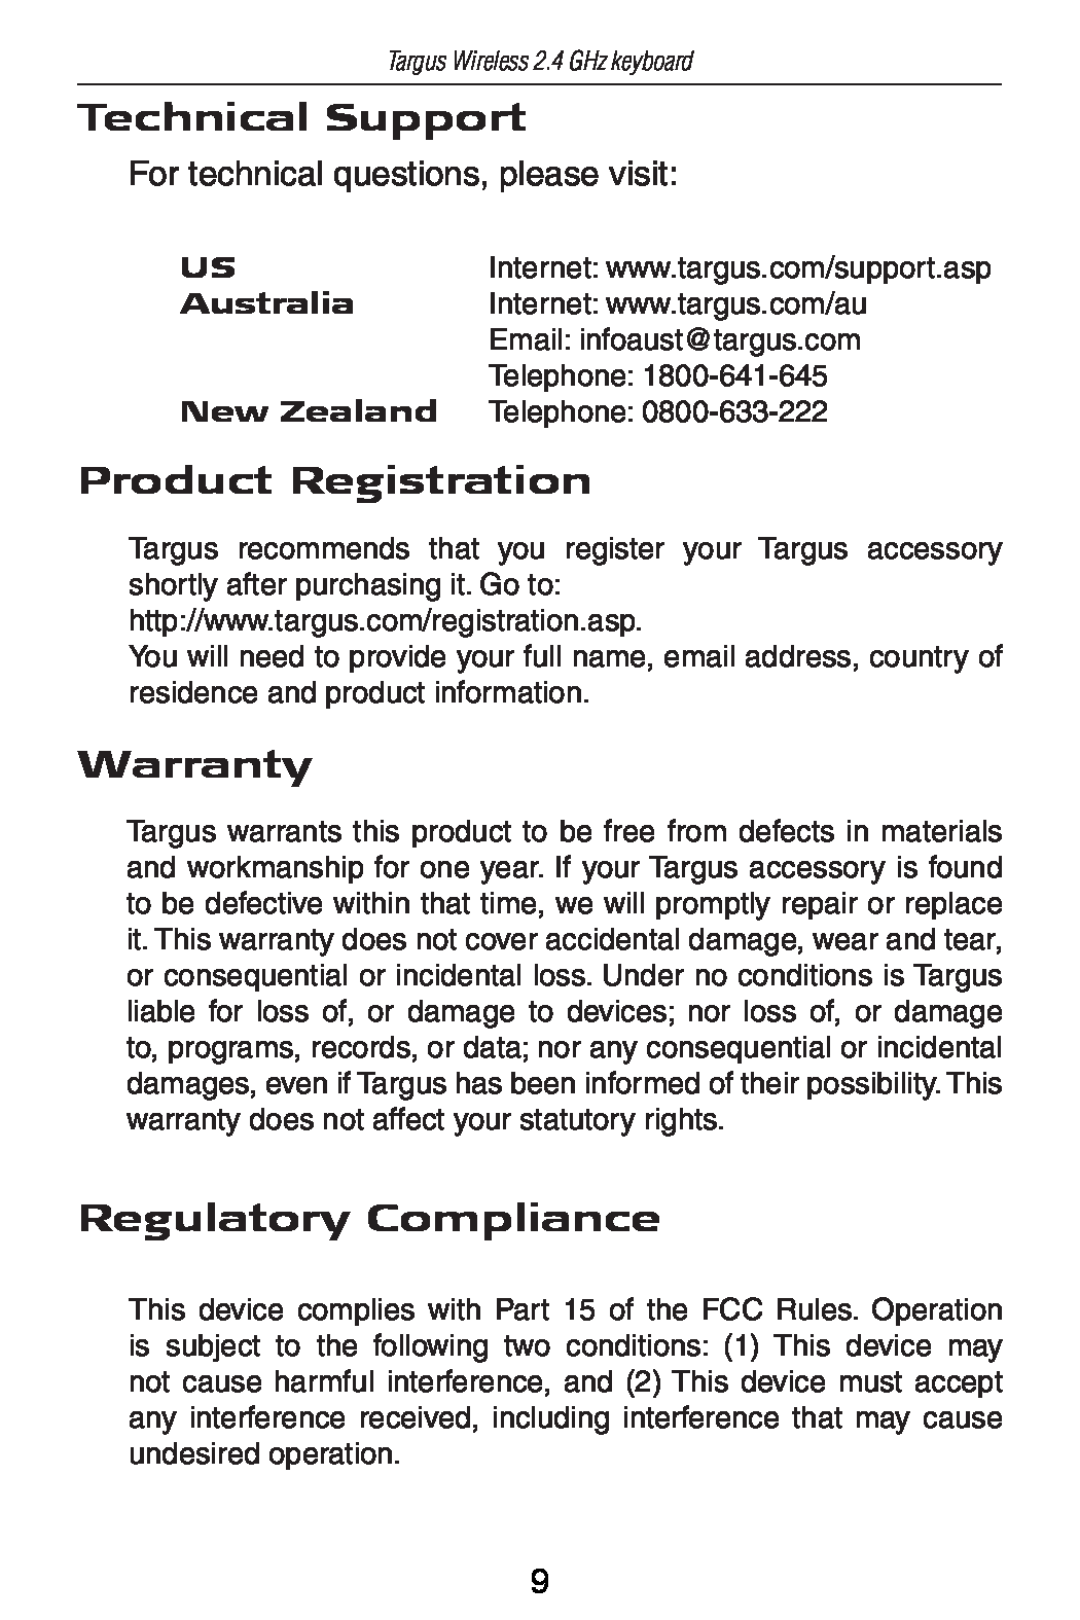 Targus AKB24US Technical Support, Product Registration, Warranty, Regulatory Compliance, Australia, New Zealand 